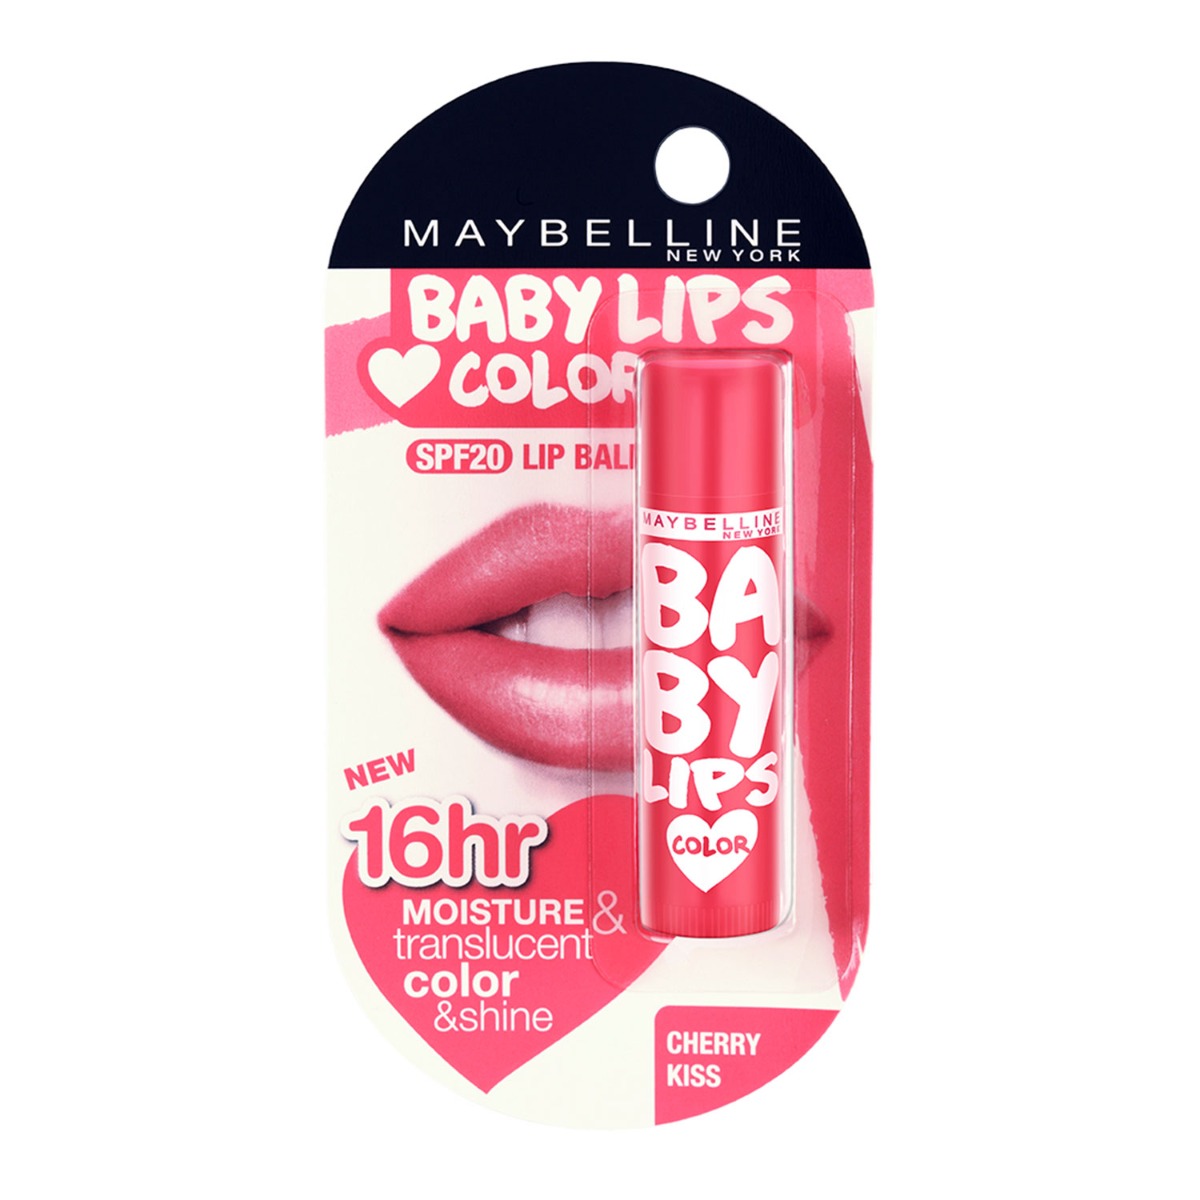 Maybelline New York Baby Lips Lip Balm, Cherry Kiss, 4gm